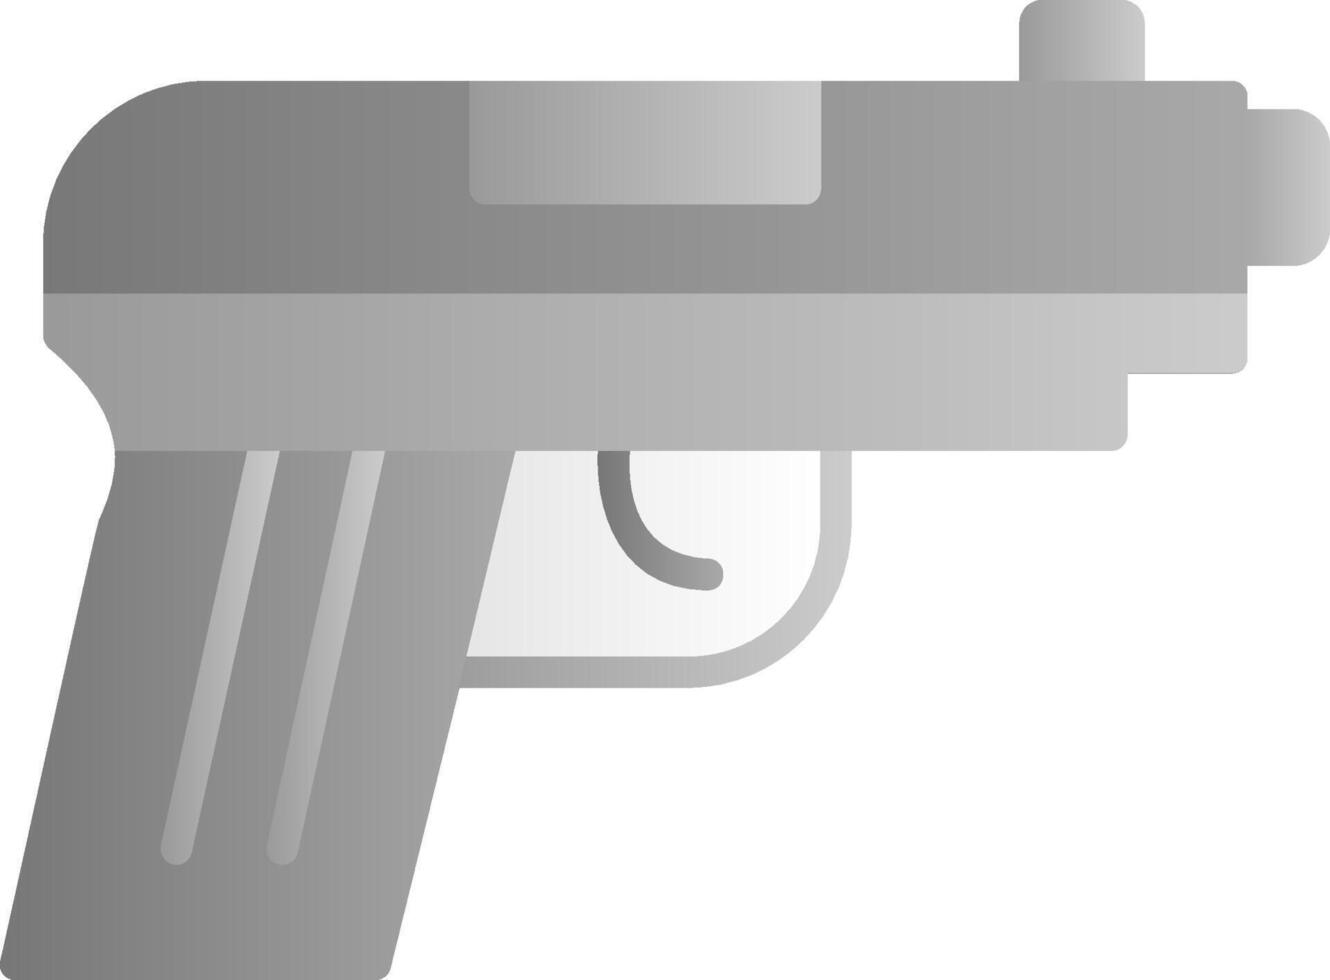 pistola pistola vector icono